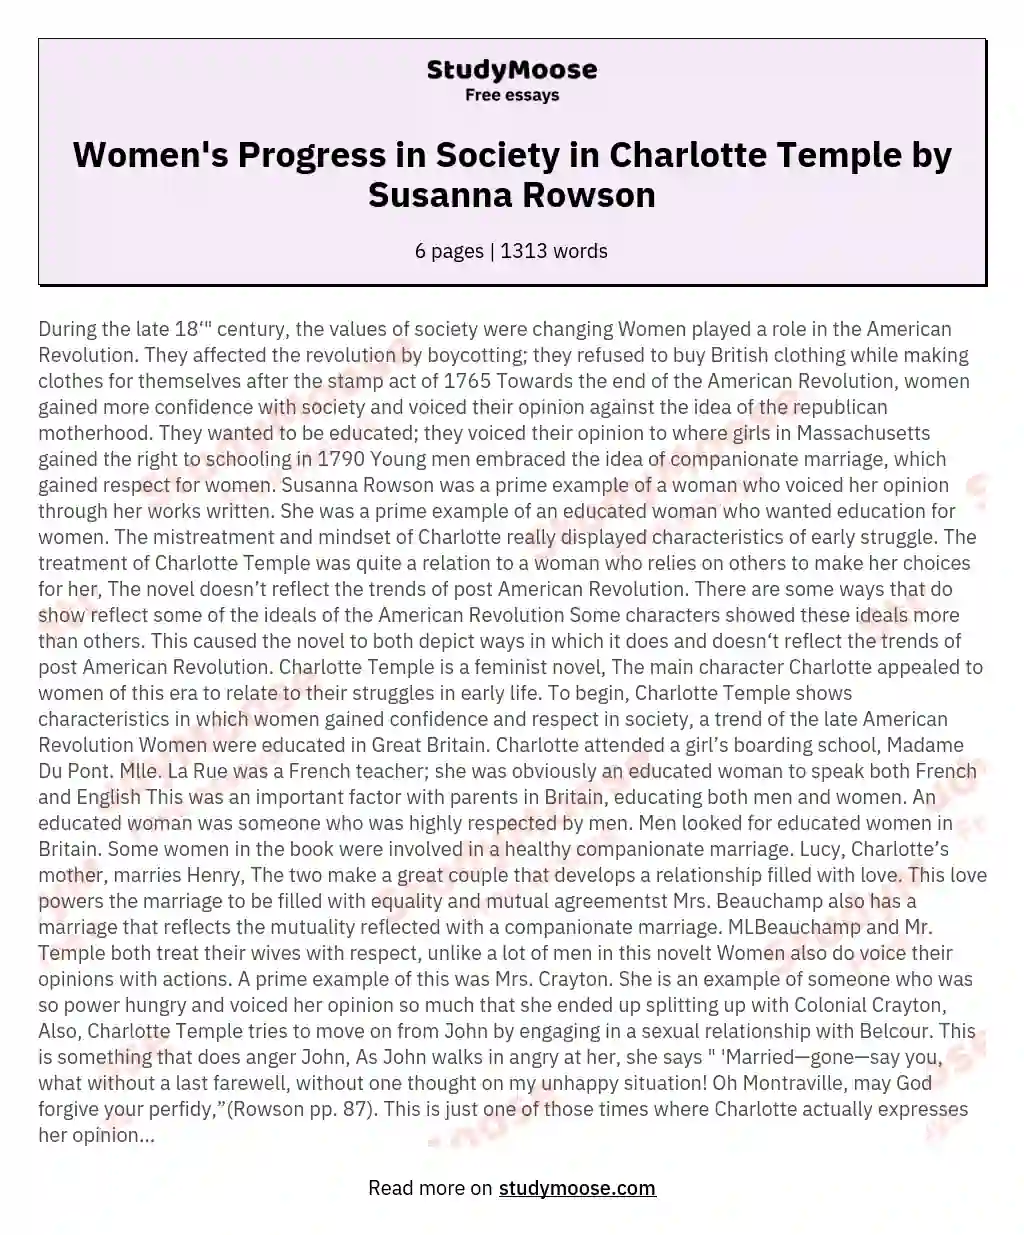 Women's Progress in Society in Charlotte Temple by Susanna Rowson essay